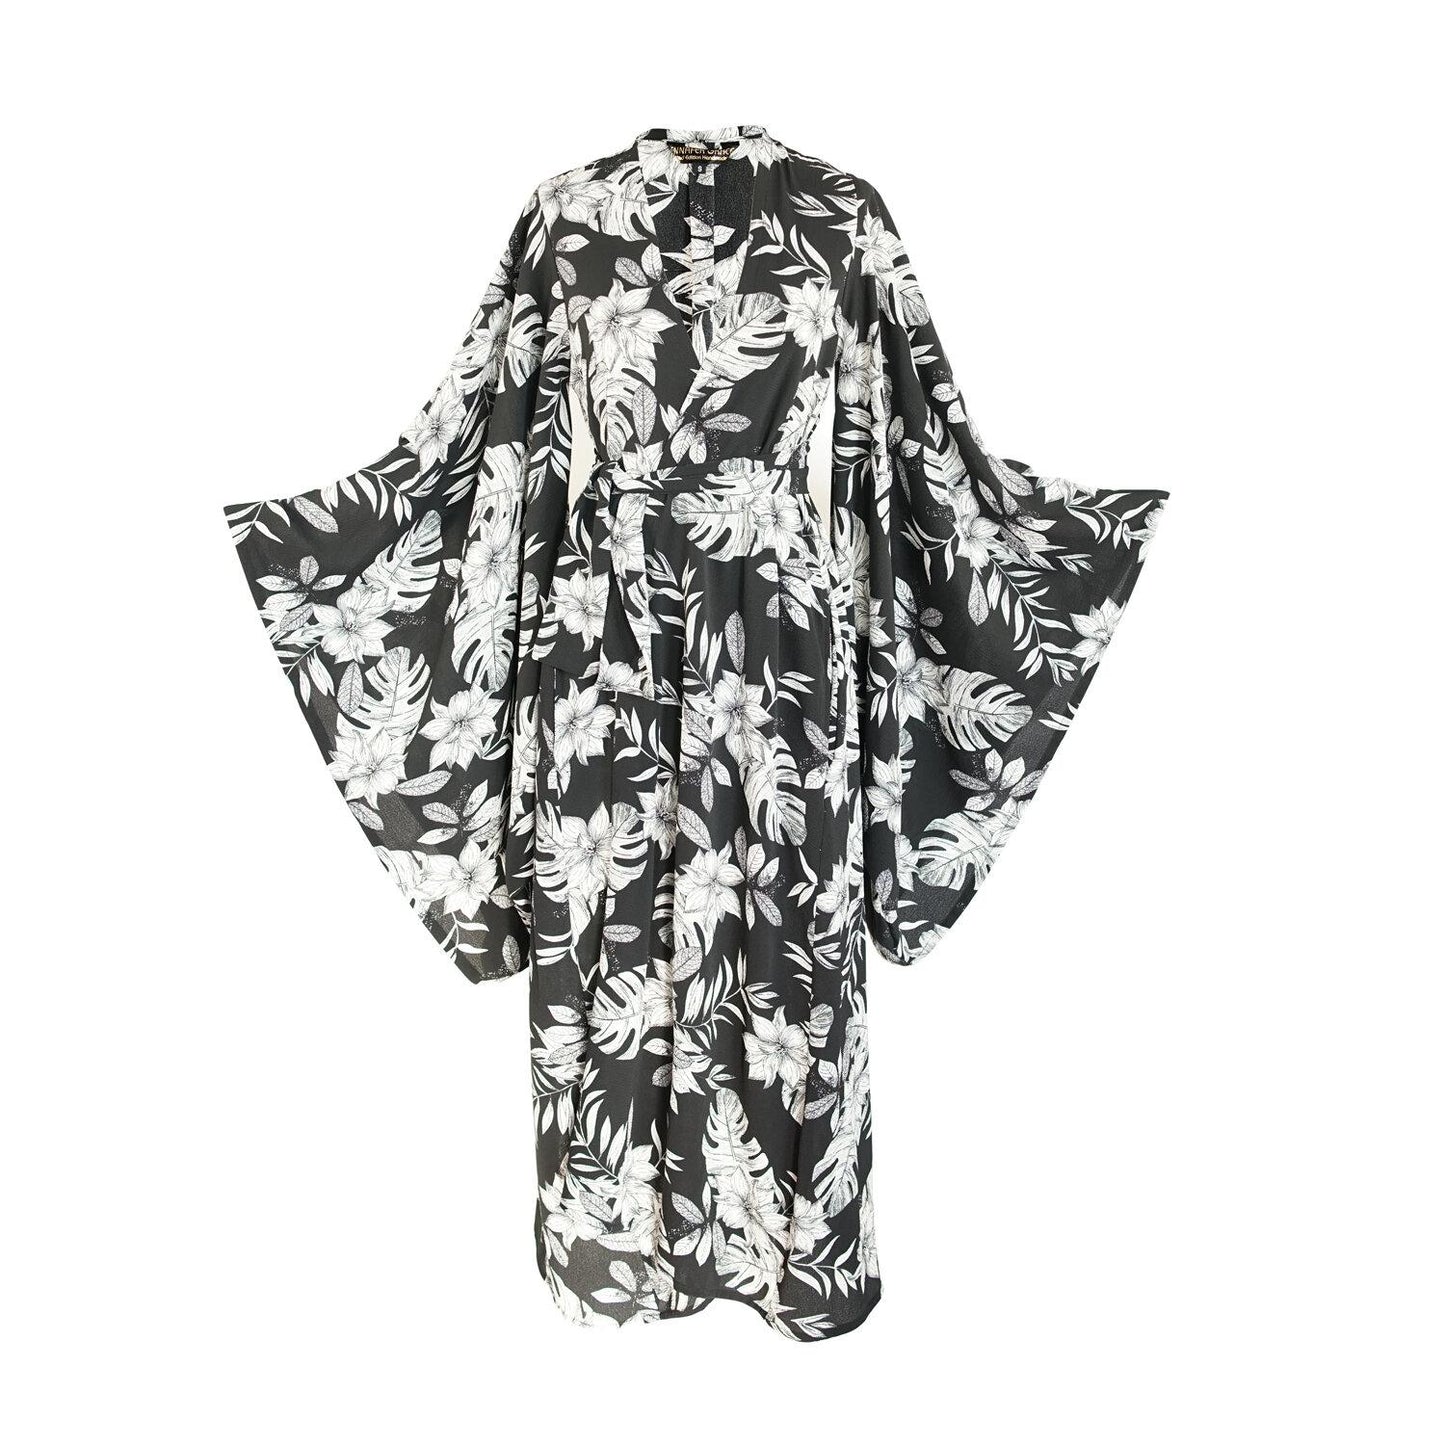 agua palma blue black white palm tropical print pattern kimono wrap dress layering shawl jacket robe jennafergrace handmade luxe everyday